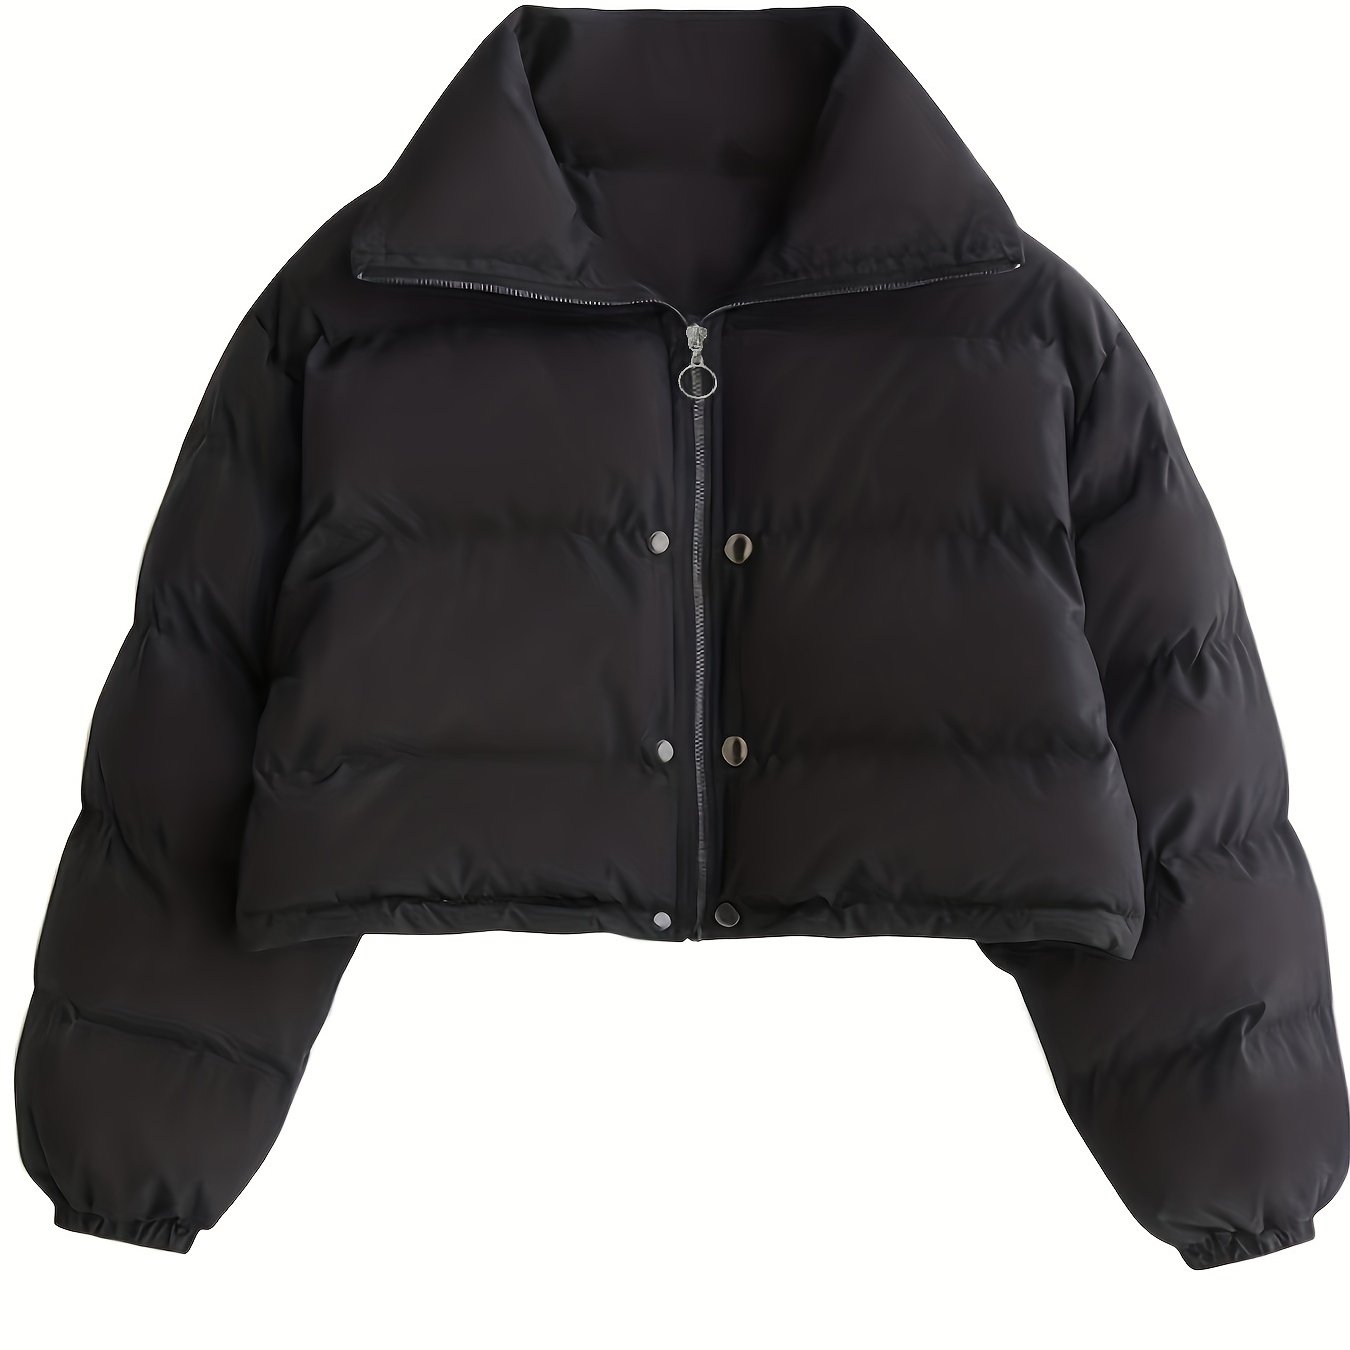 Solid Full Zipper Crop Coat, Warm Stand Collar Lightweight Coat, Outerwear For Fall & Winter, Women's Clothing